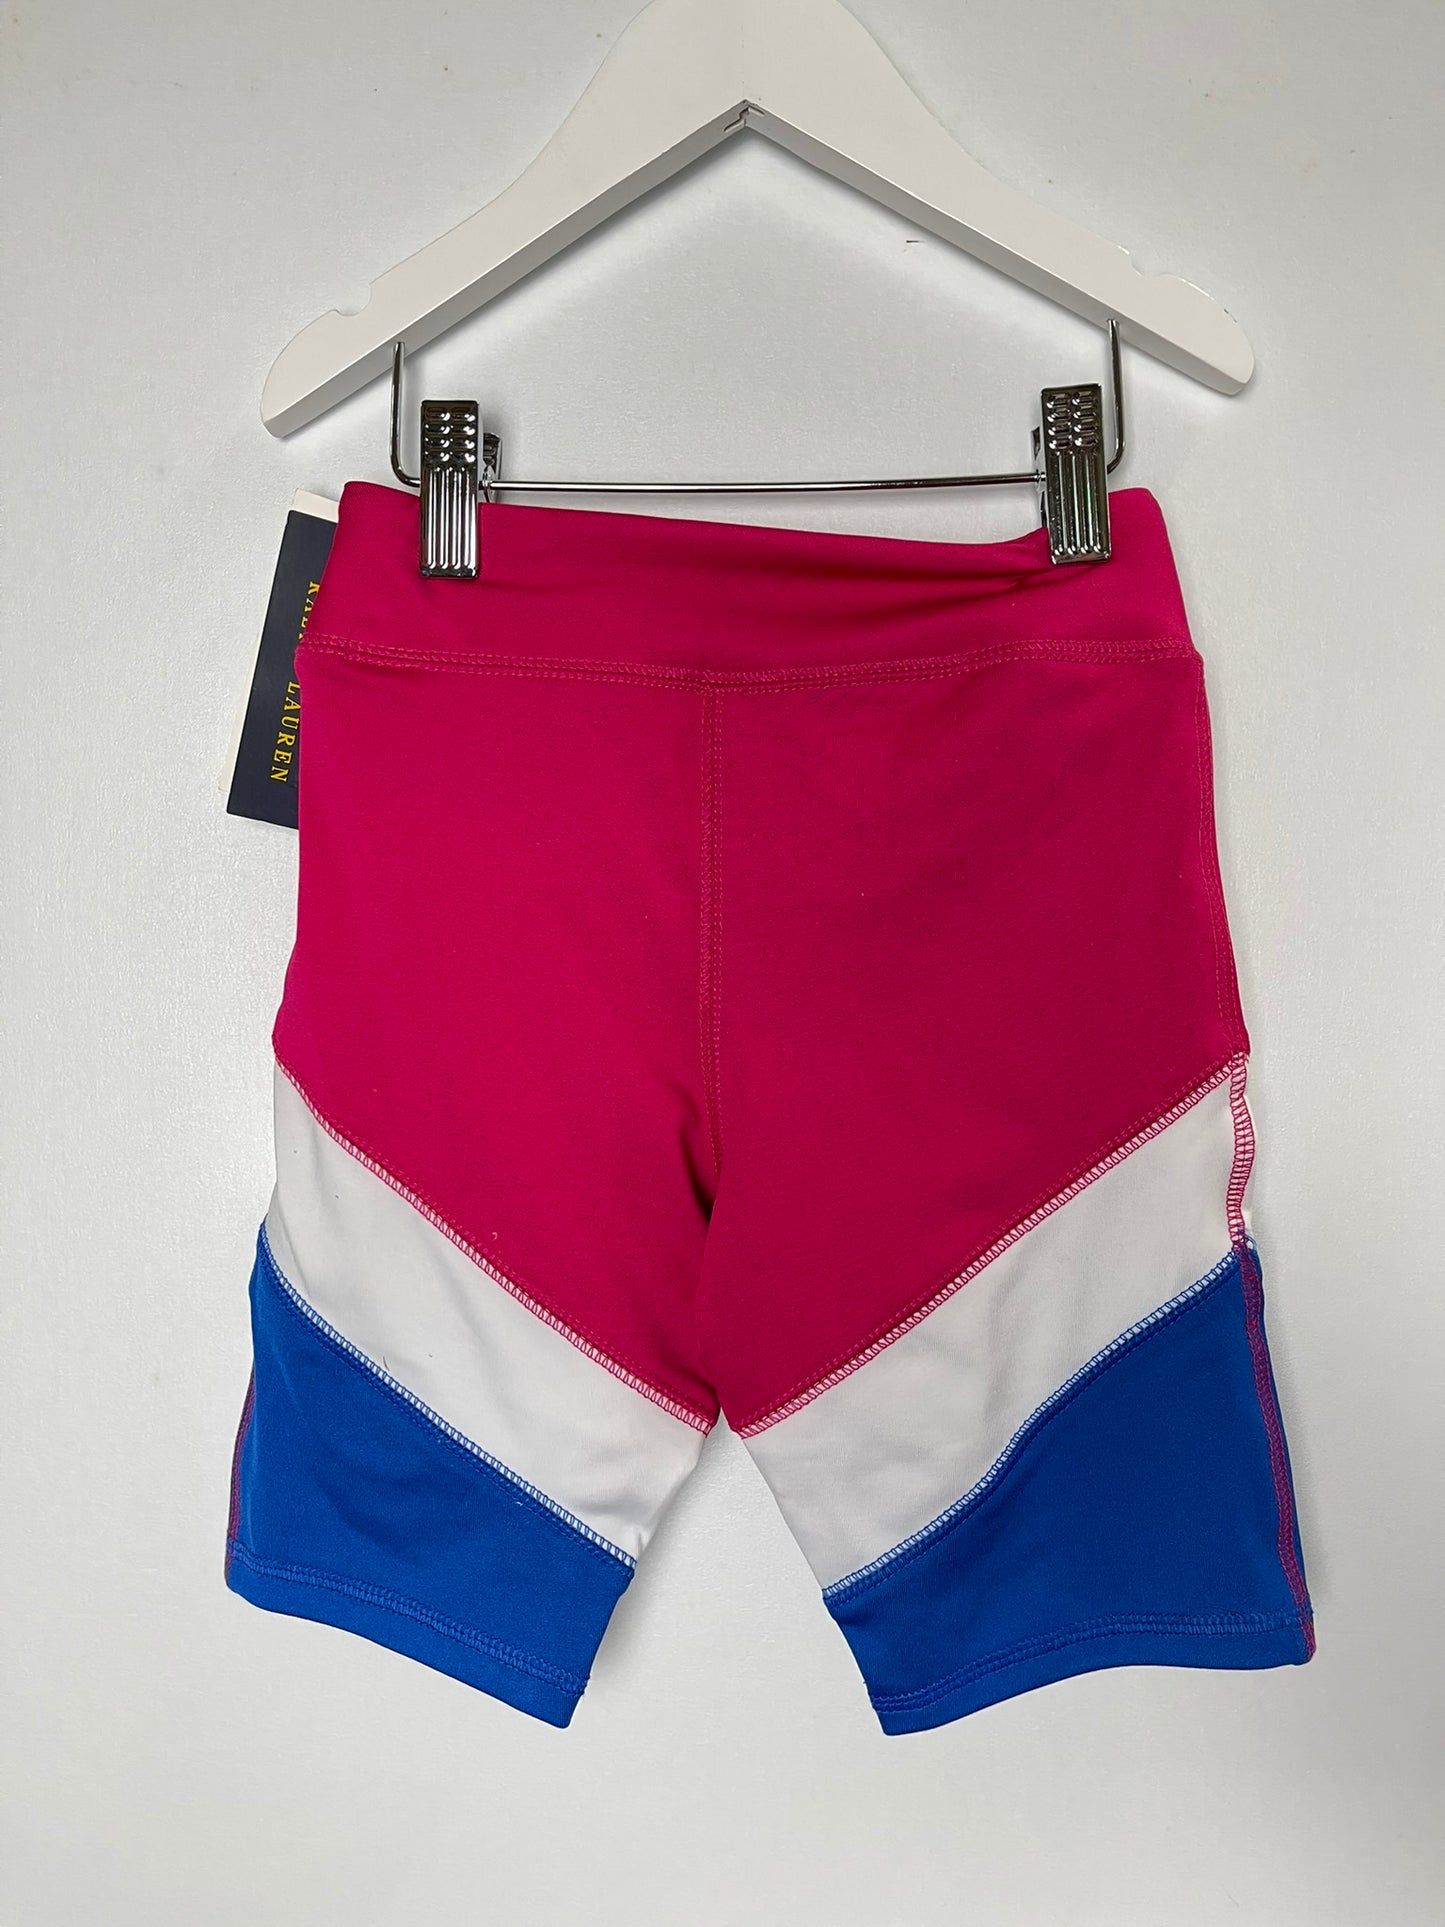 BNWT Polo Ralph Lauren Pink Bike Shorts Age 5/6